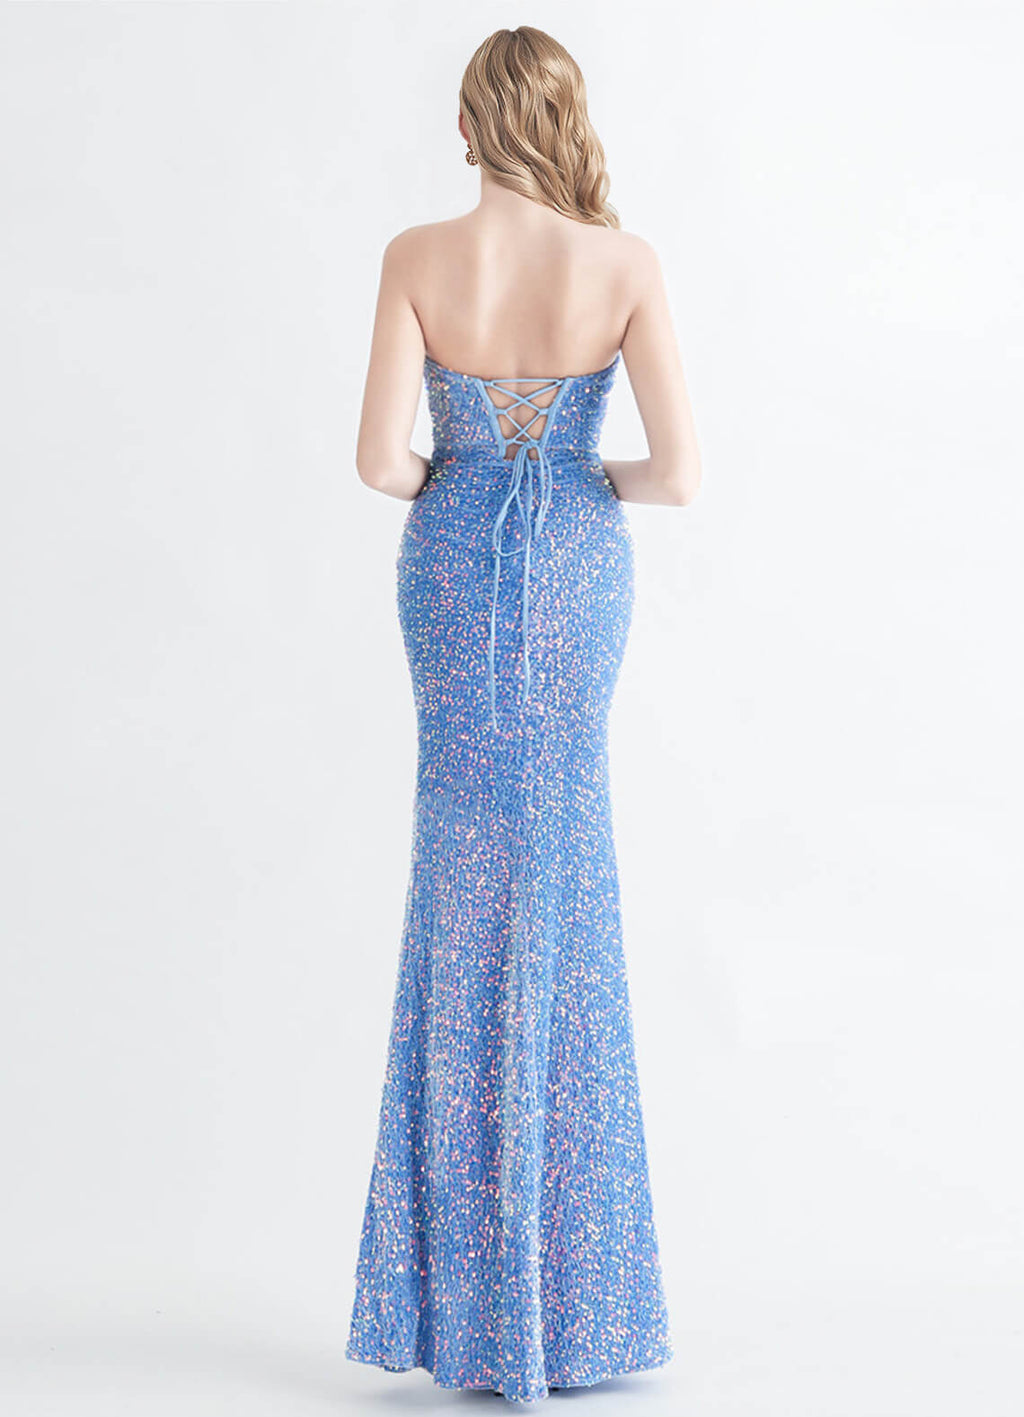 NZ Bridal Strapless Slit Cornflower Blue Sequin Mermaid Prom Dress 31155 Victoria c